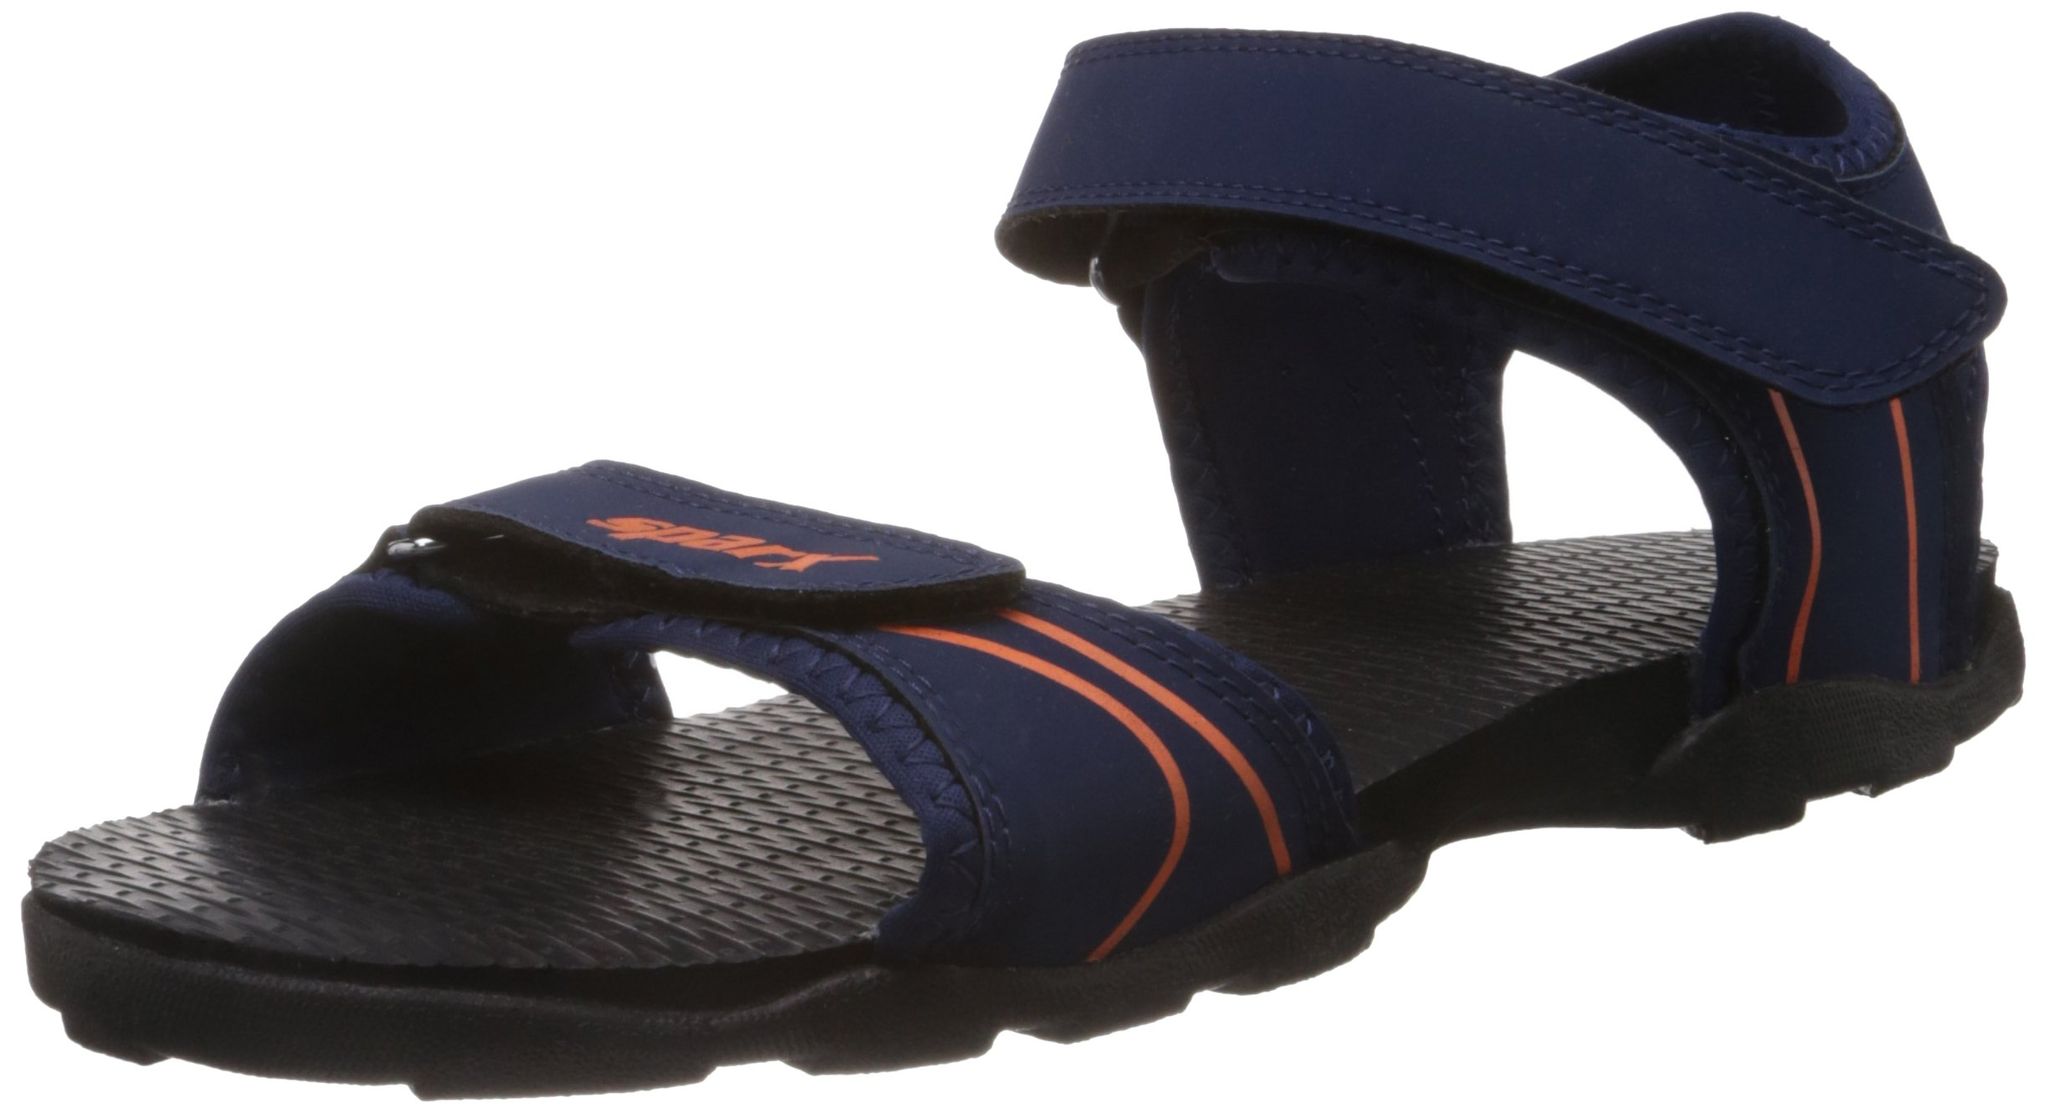 Sparx SS-210 Navy Blue Floater Men Navy, Blue Sandals - Buy  NavyBlueTurkeyBlue Color Sparx SS-210 Navy Blue Floater Men Navy, Blue  Sandals Online at Best Price - Shop Online for Footwears in